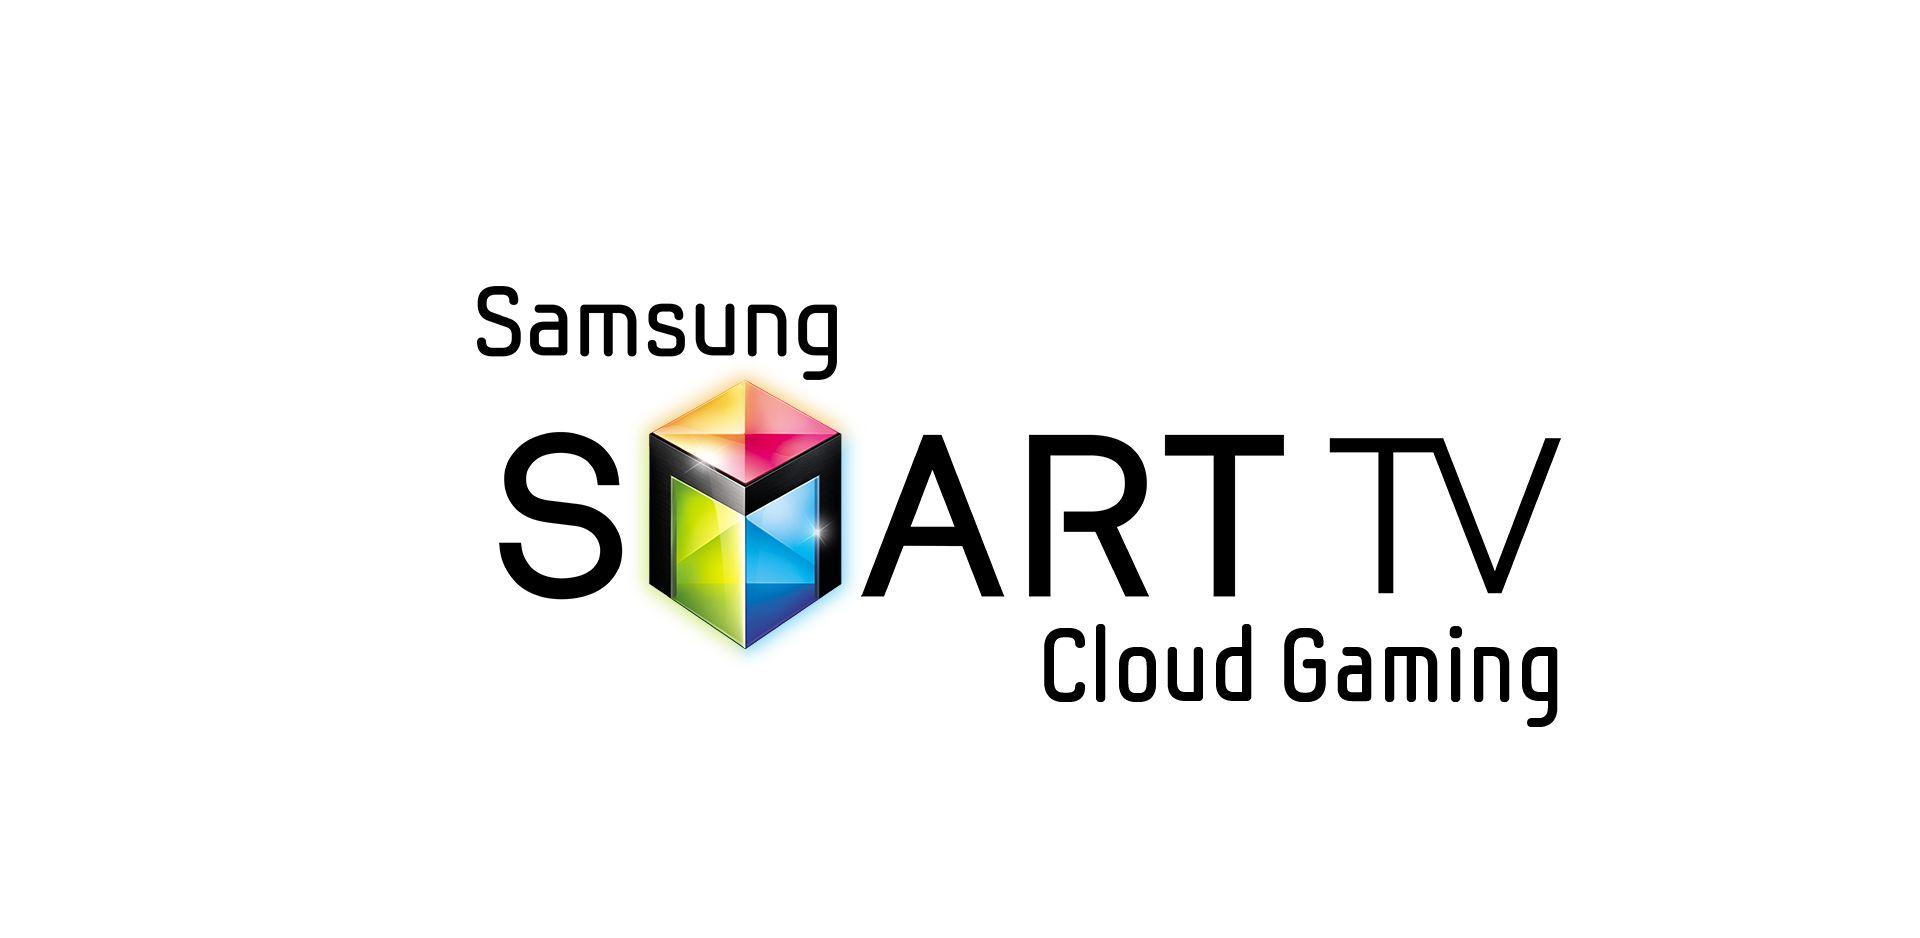 SamsungTelevisions Logo - samsung smart tv logo « Logos of brands